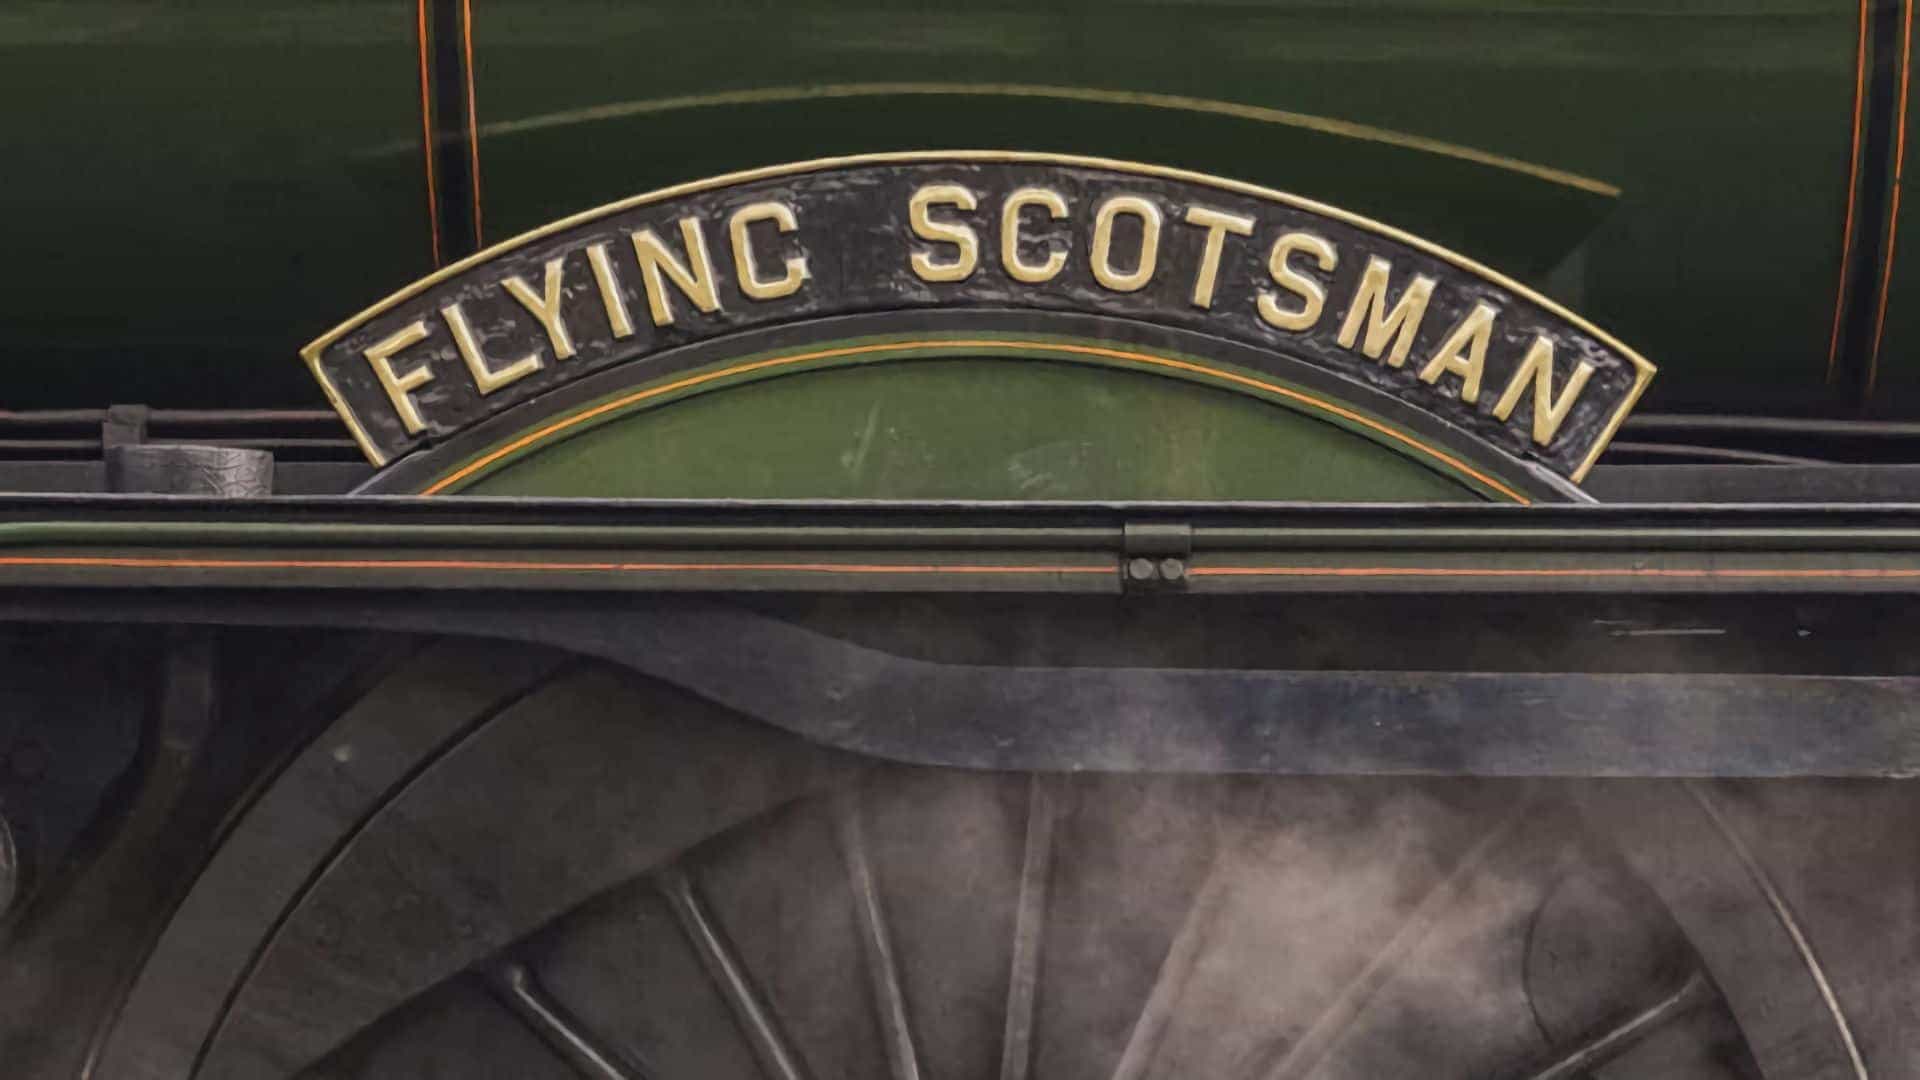 Ride on Flying Scotsman